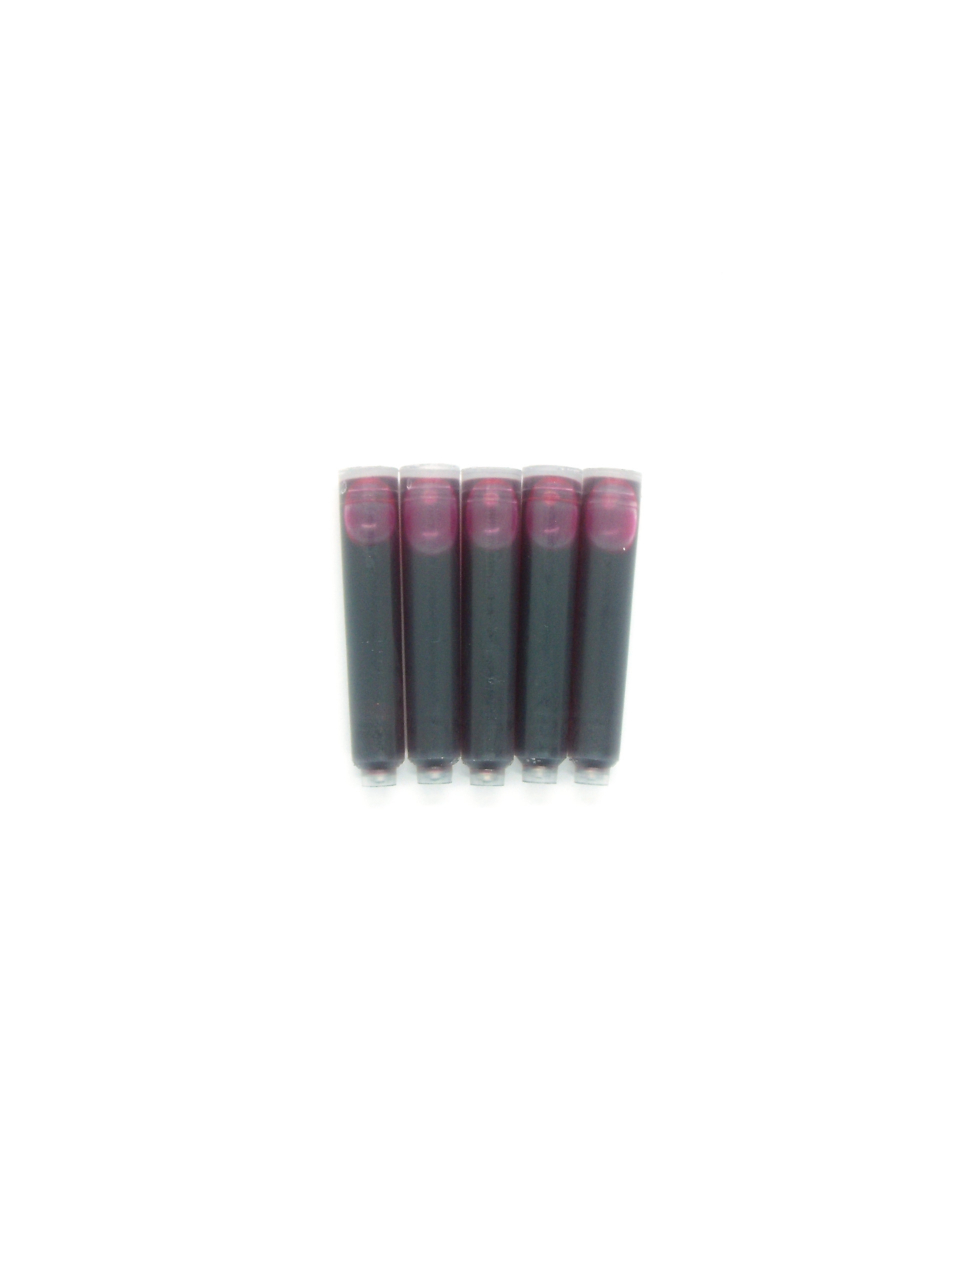 PenConverter Ink Cartridges For Reform Fountain Pens (Pink)